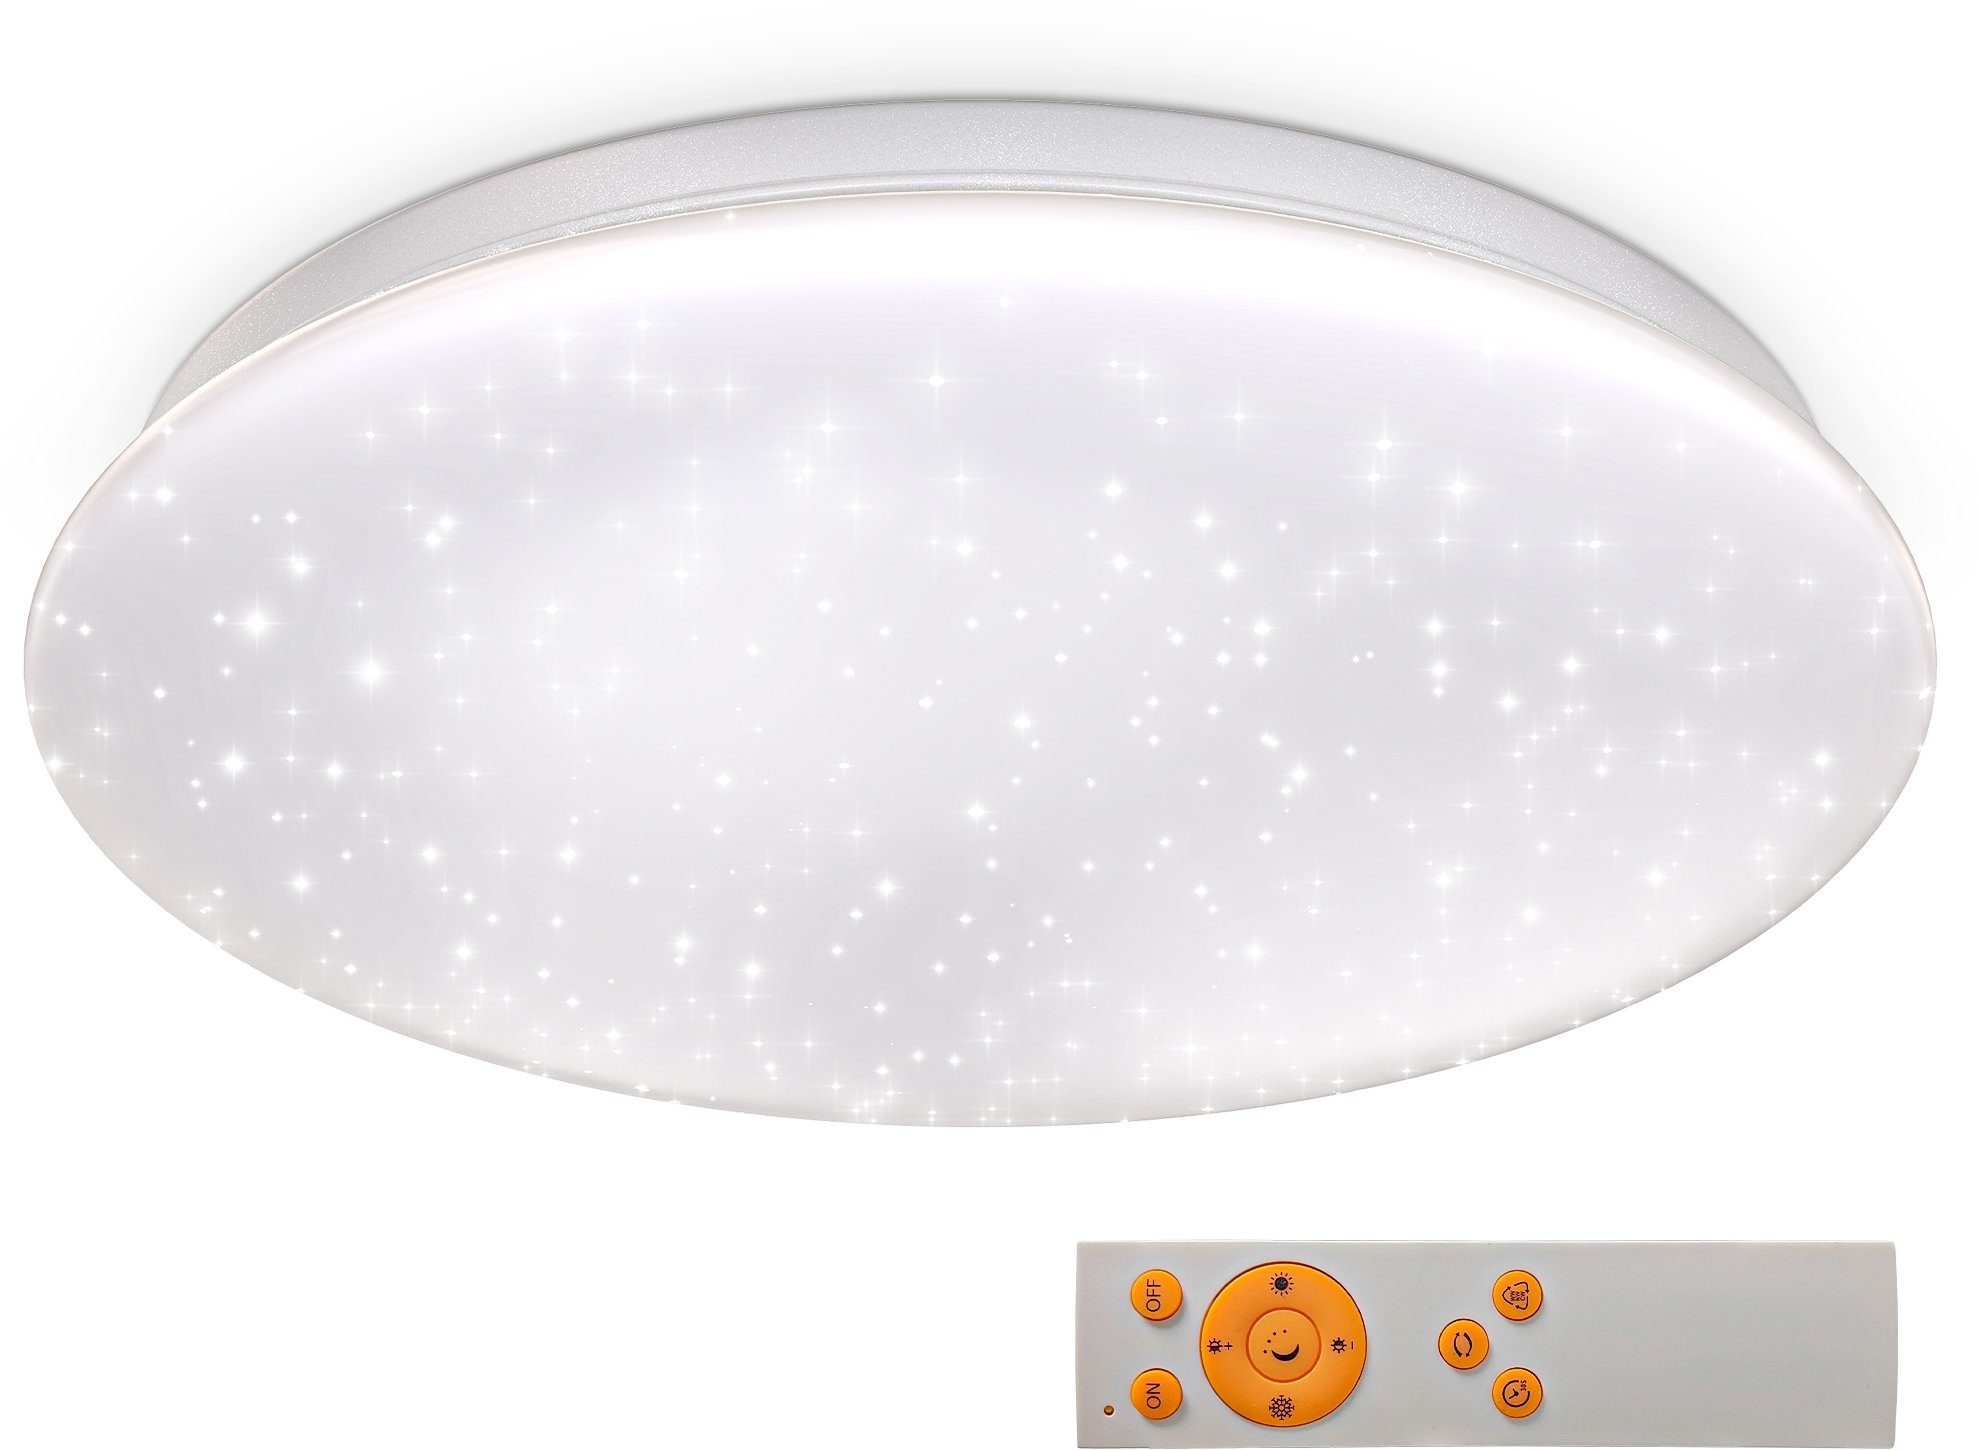 fest LED integriert, Sternenhimmel, B.K.Licht 17W Deckenlampe, LED, dimmbar, Deckenleuchte, Neutralweiß, Farbtemperatursteuerung